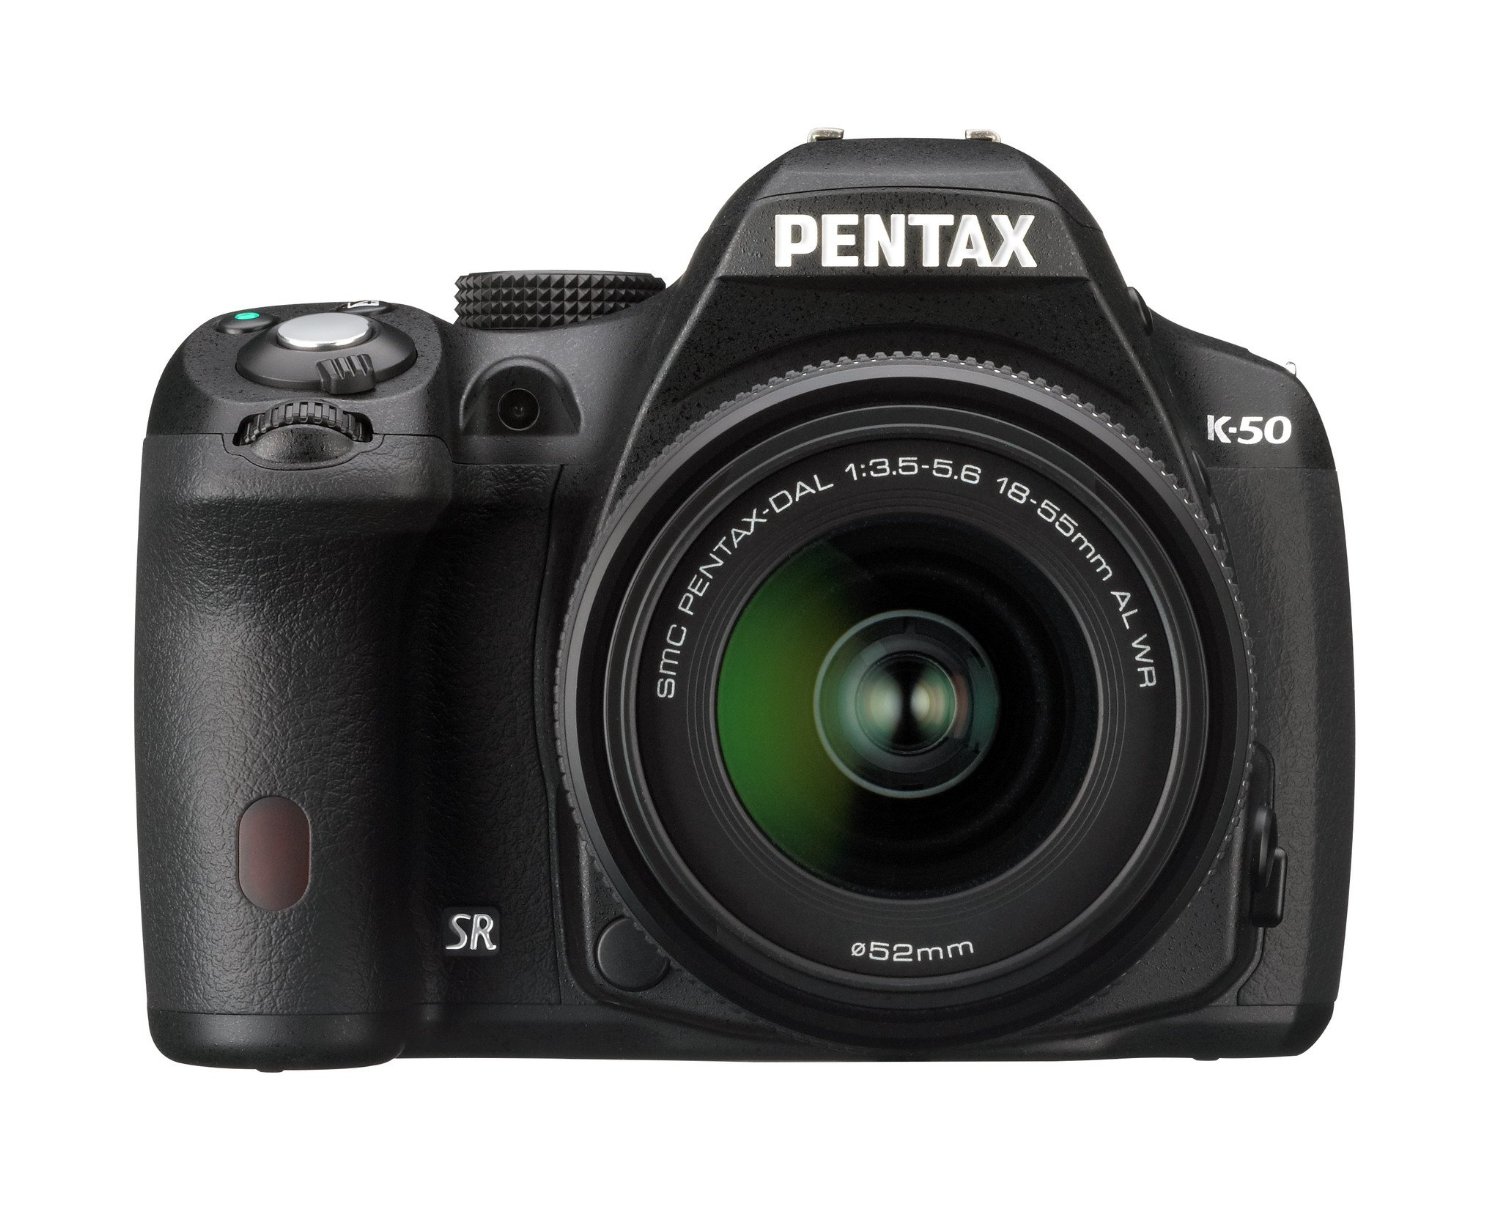 Pentax K-50 DSLR Camera with DAL 18-55 mm WR Lens Kit, 3 inch LCD - Black